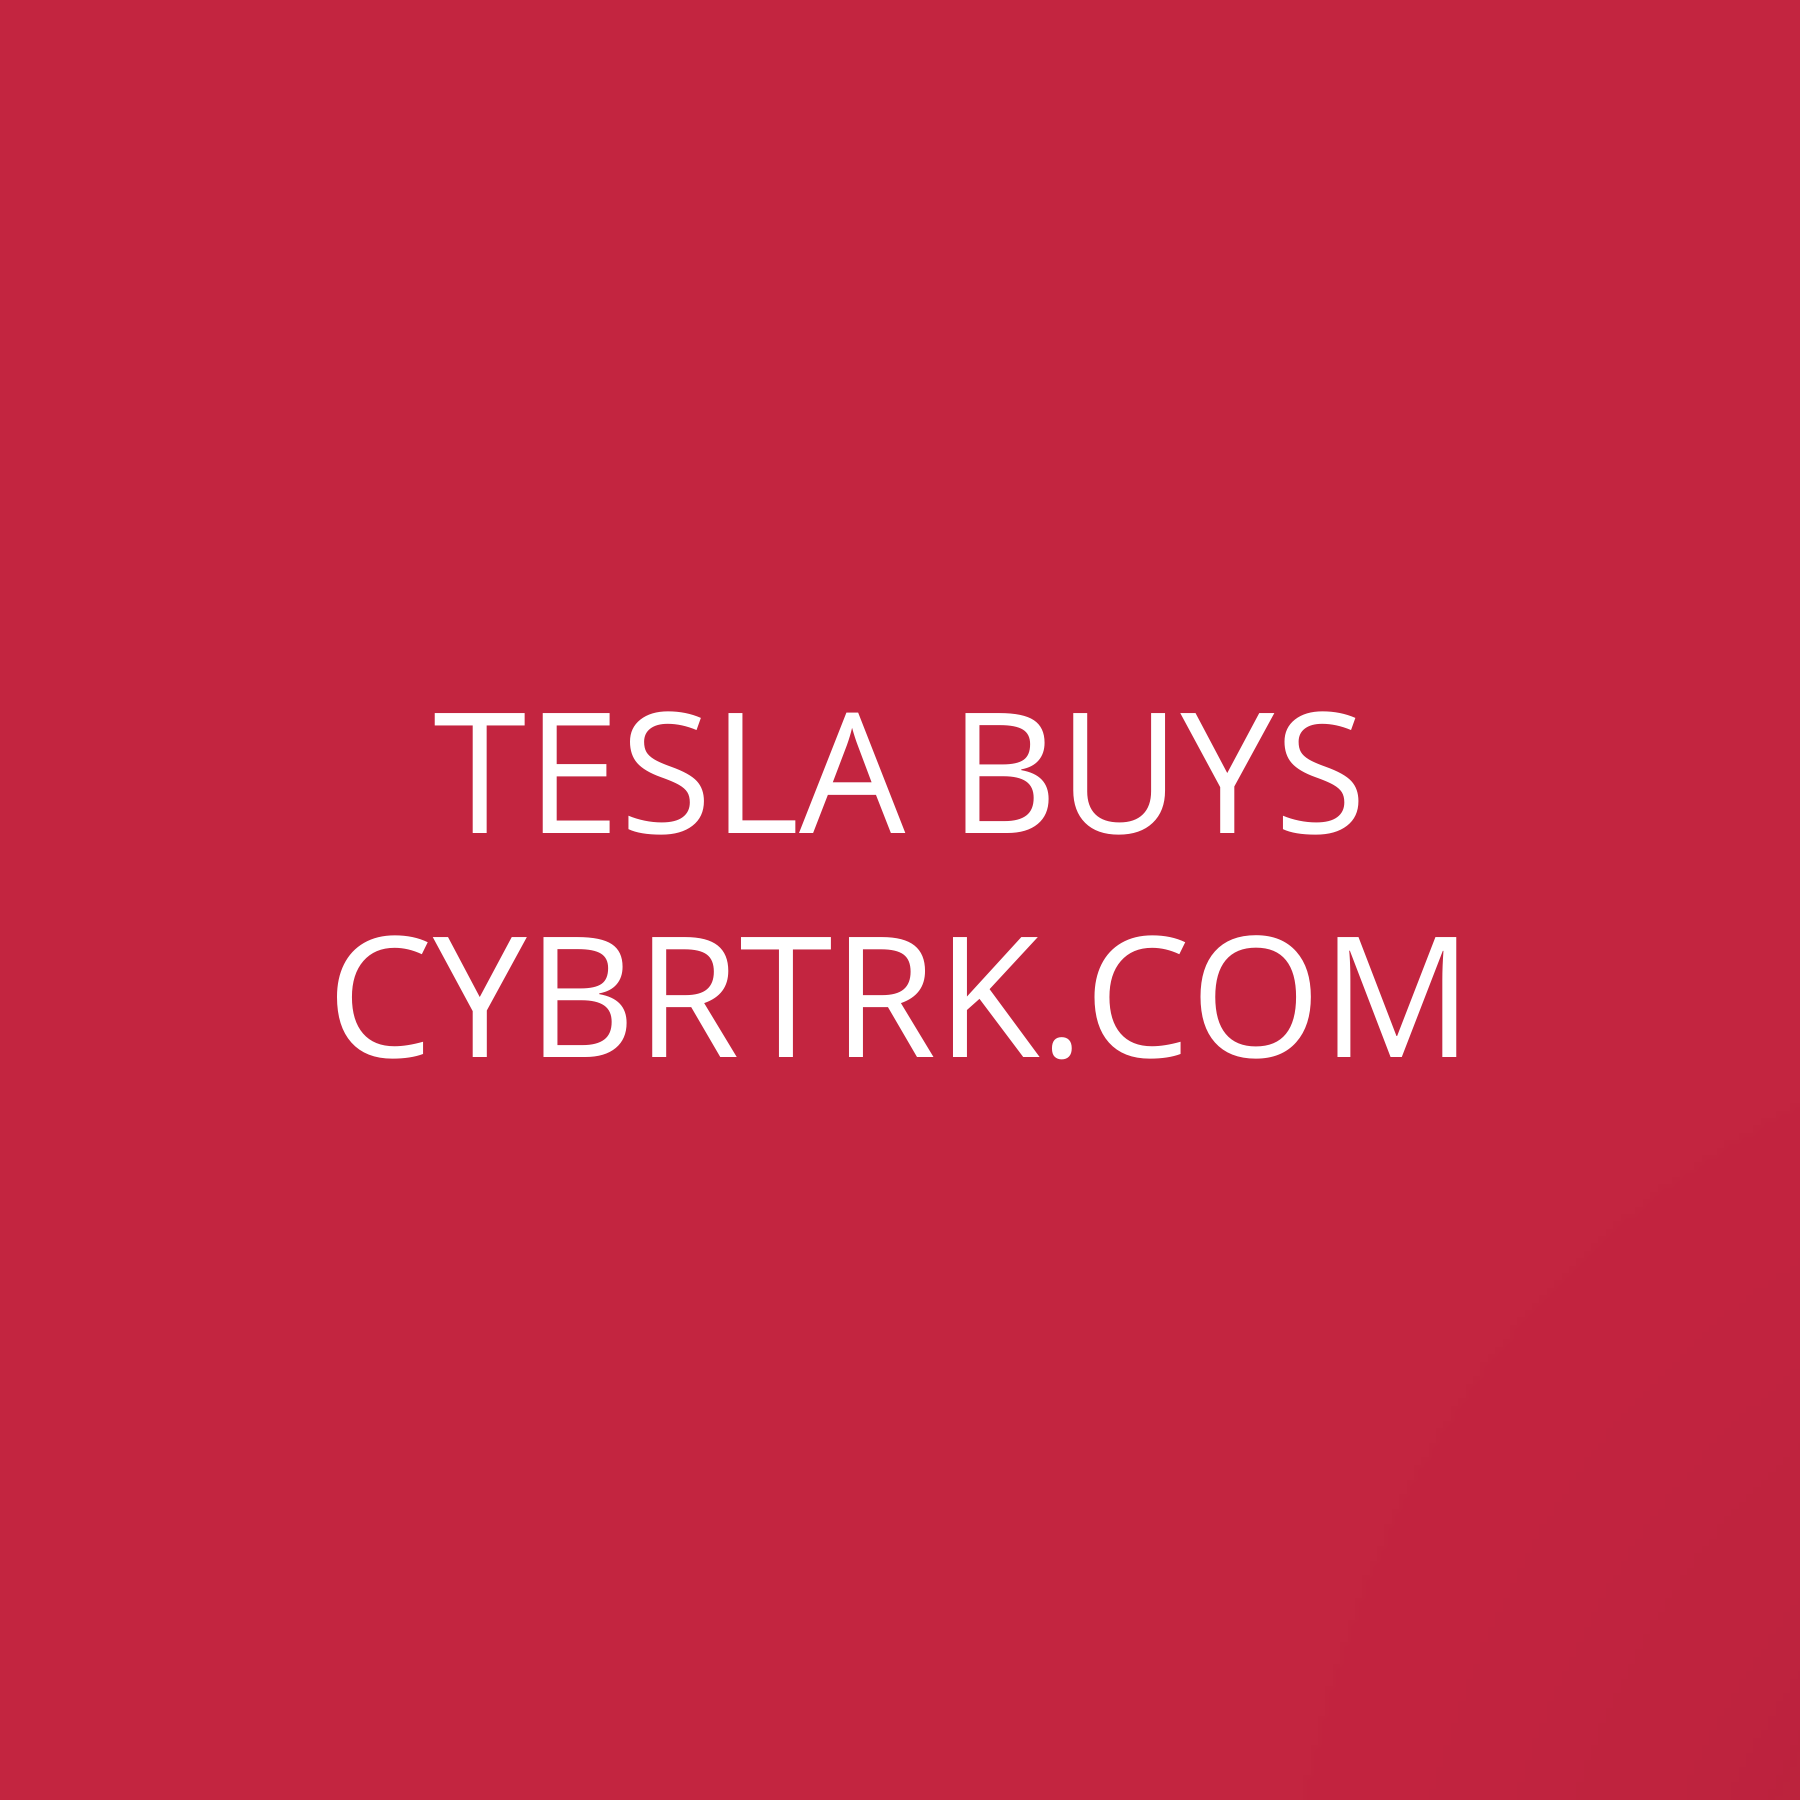 Tesla buys CybrTrk.com